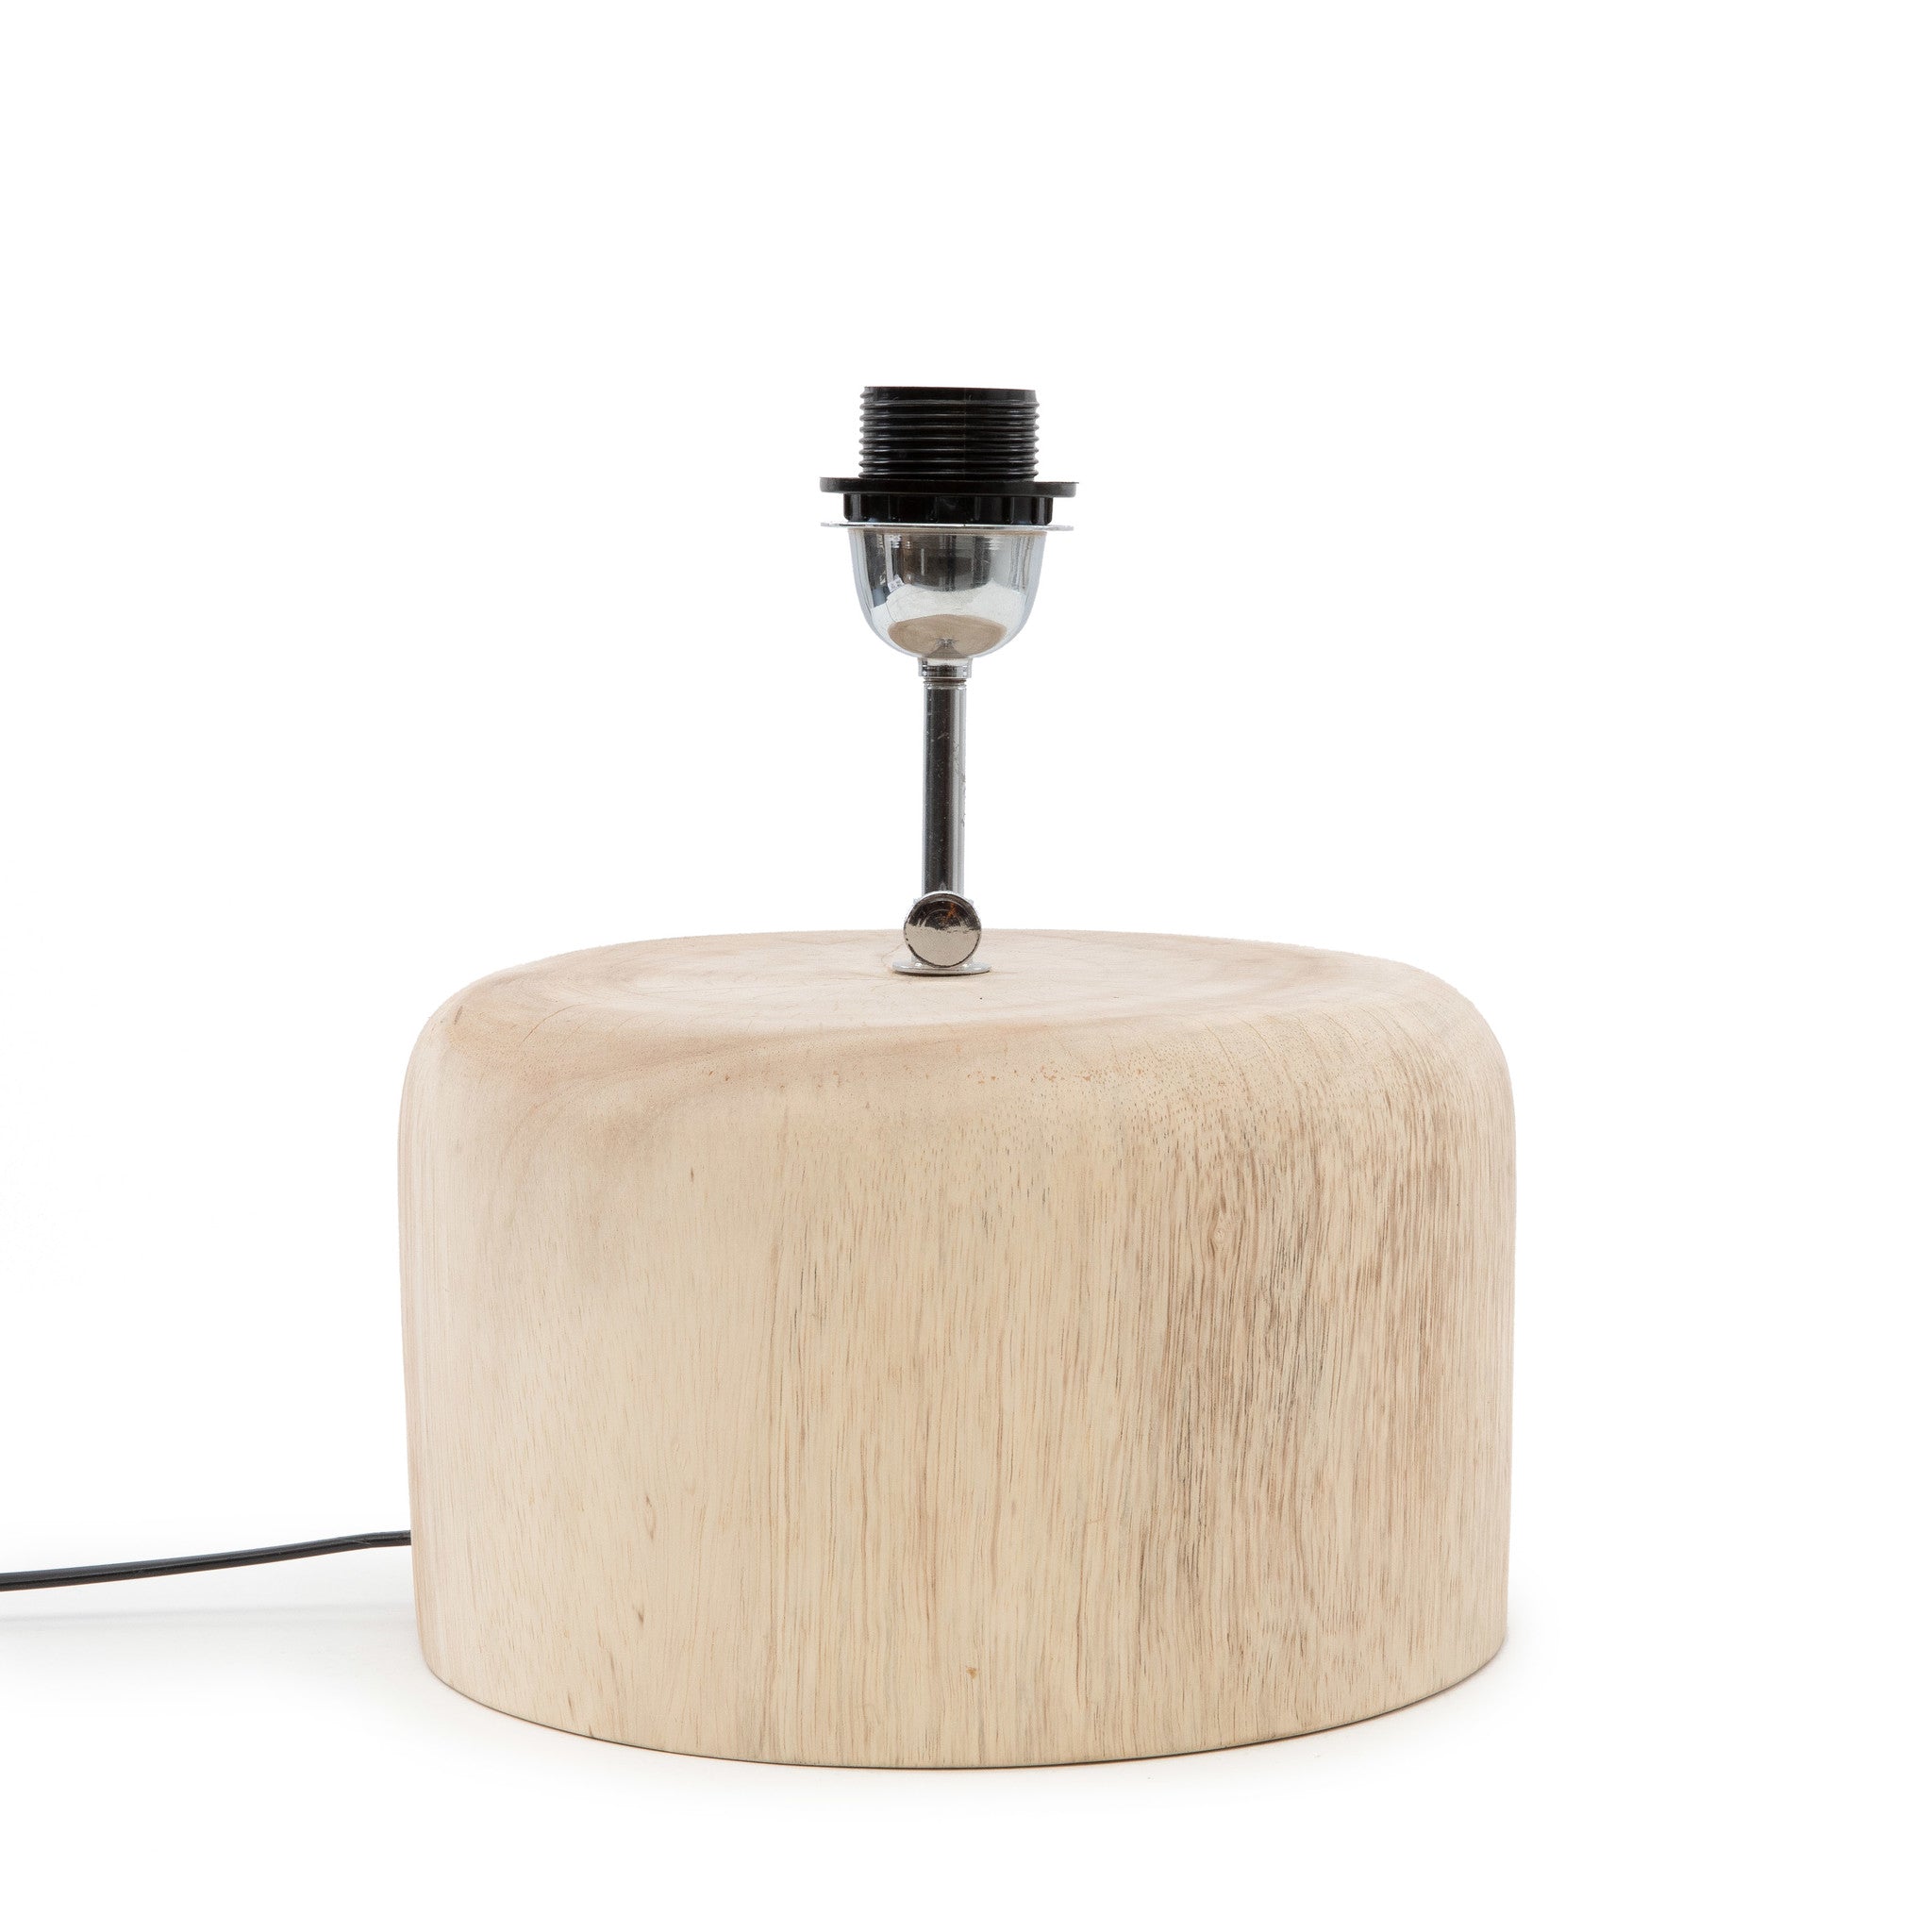 Table lamp base made of teak wood - natural